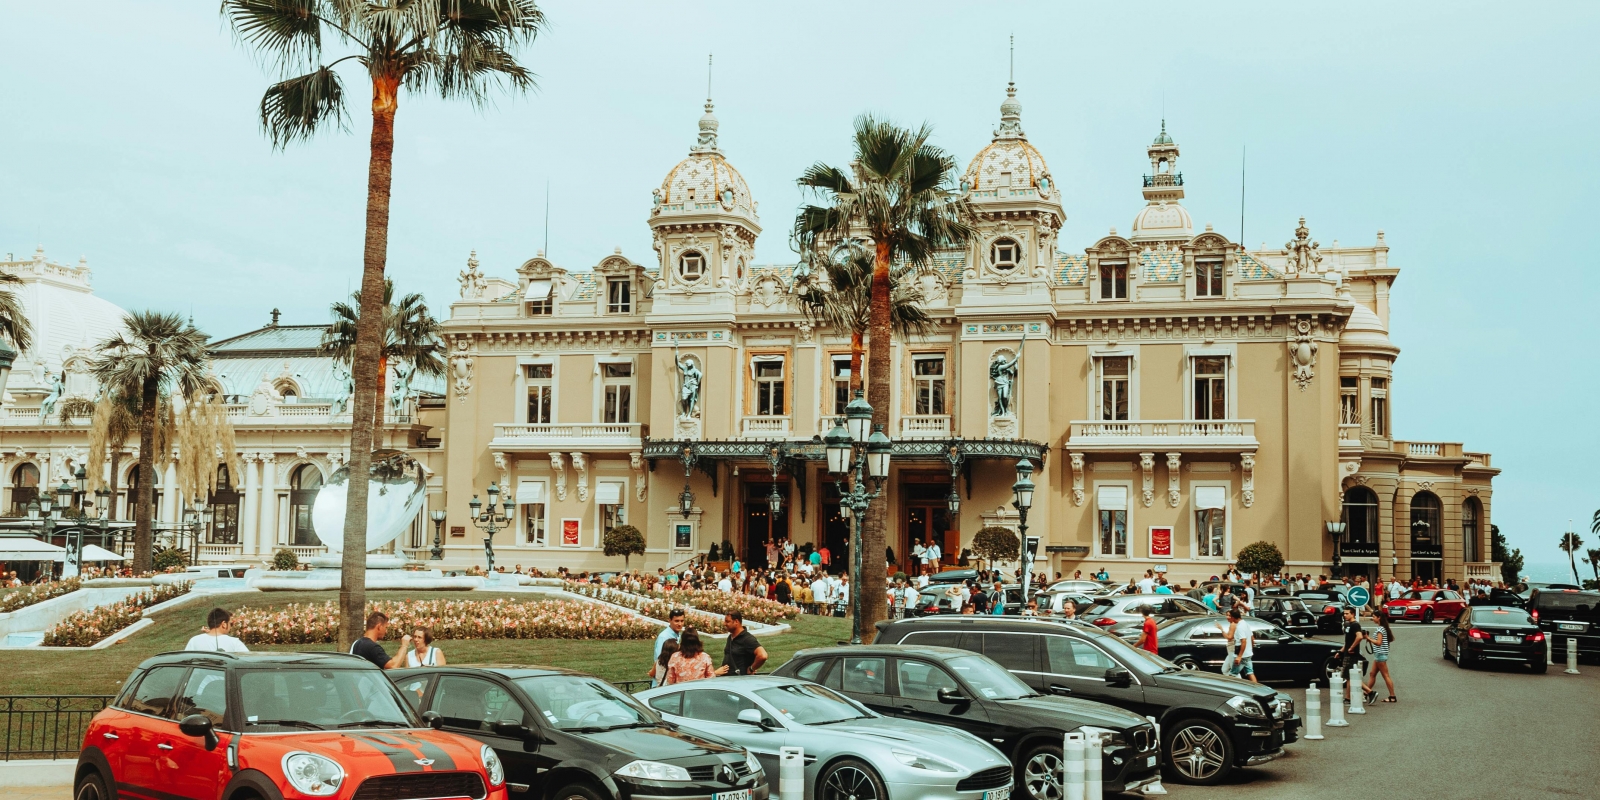 The procedure for buying property in Monaco